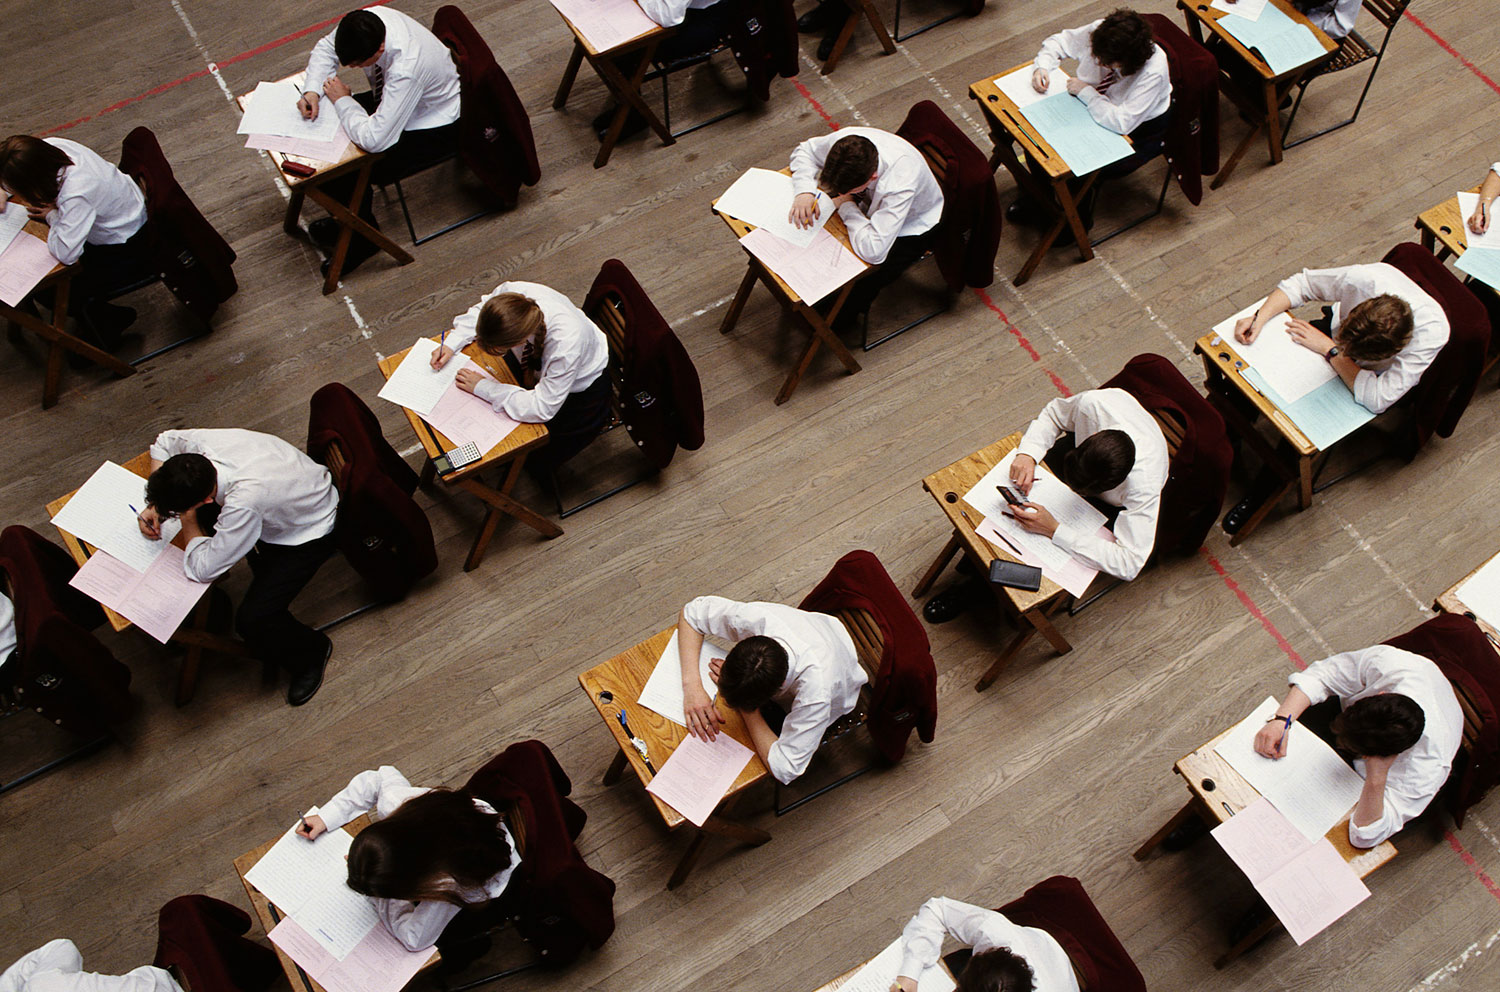 Teenage students taking examinations